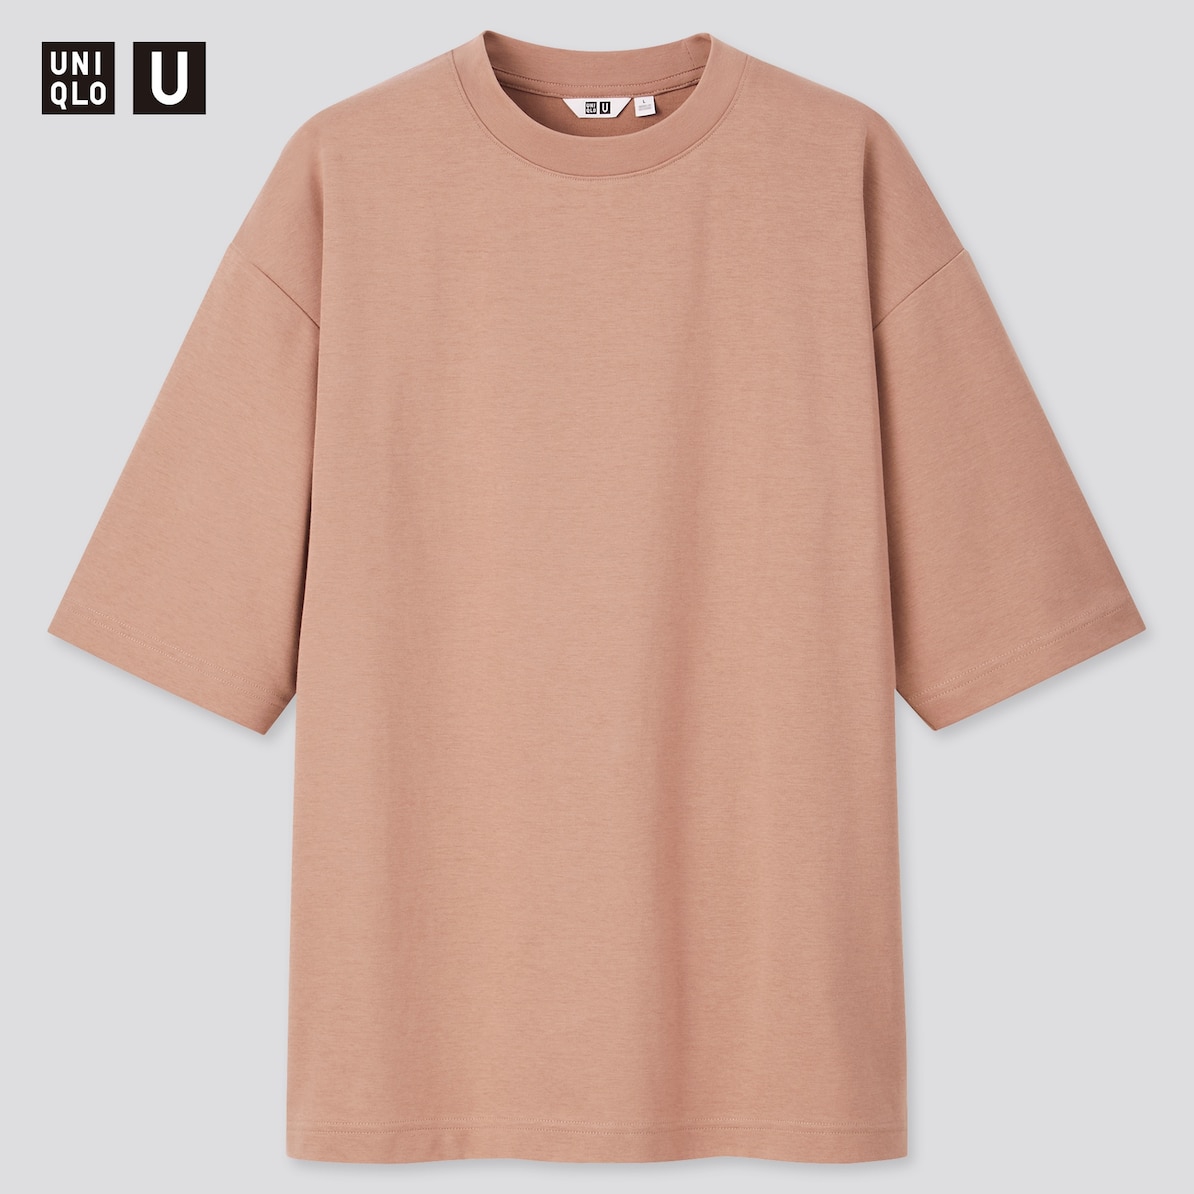 UNIQLO U(ユニクロ ユー) エアリズムコットンオーバーサイズTシャツ（5分袖）